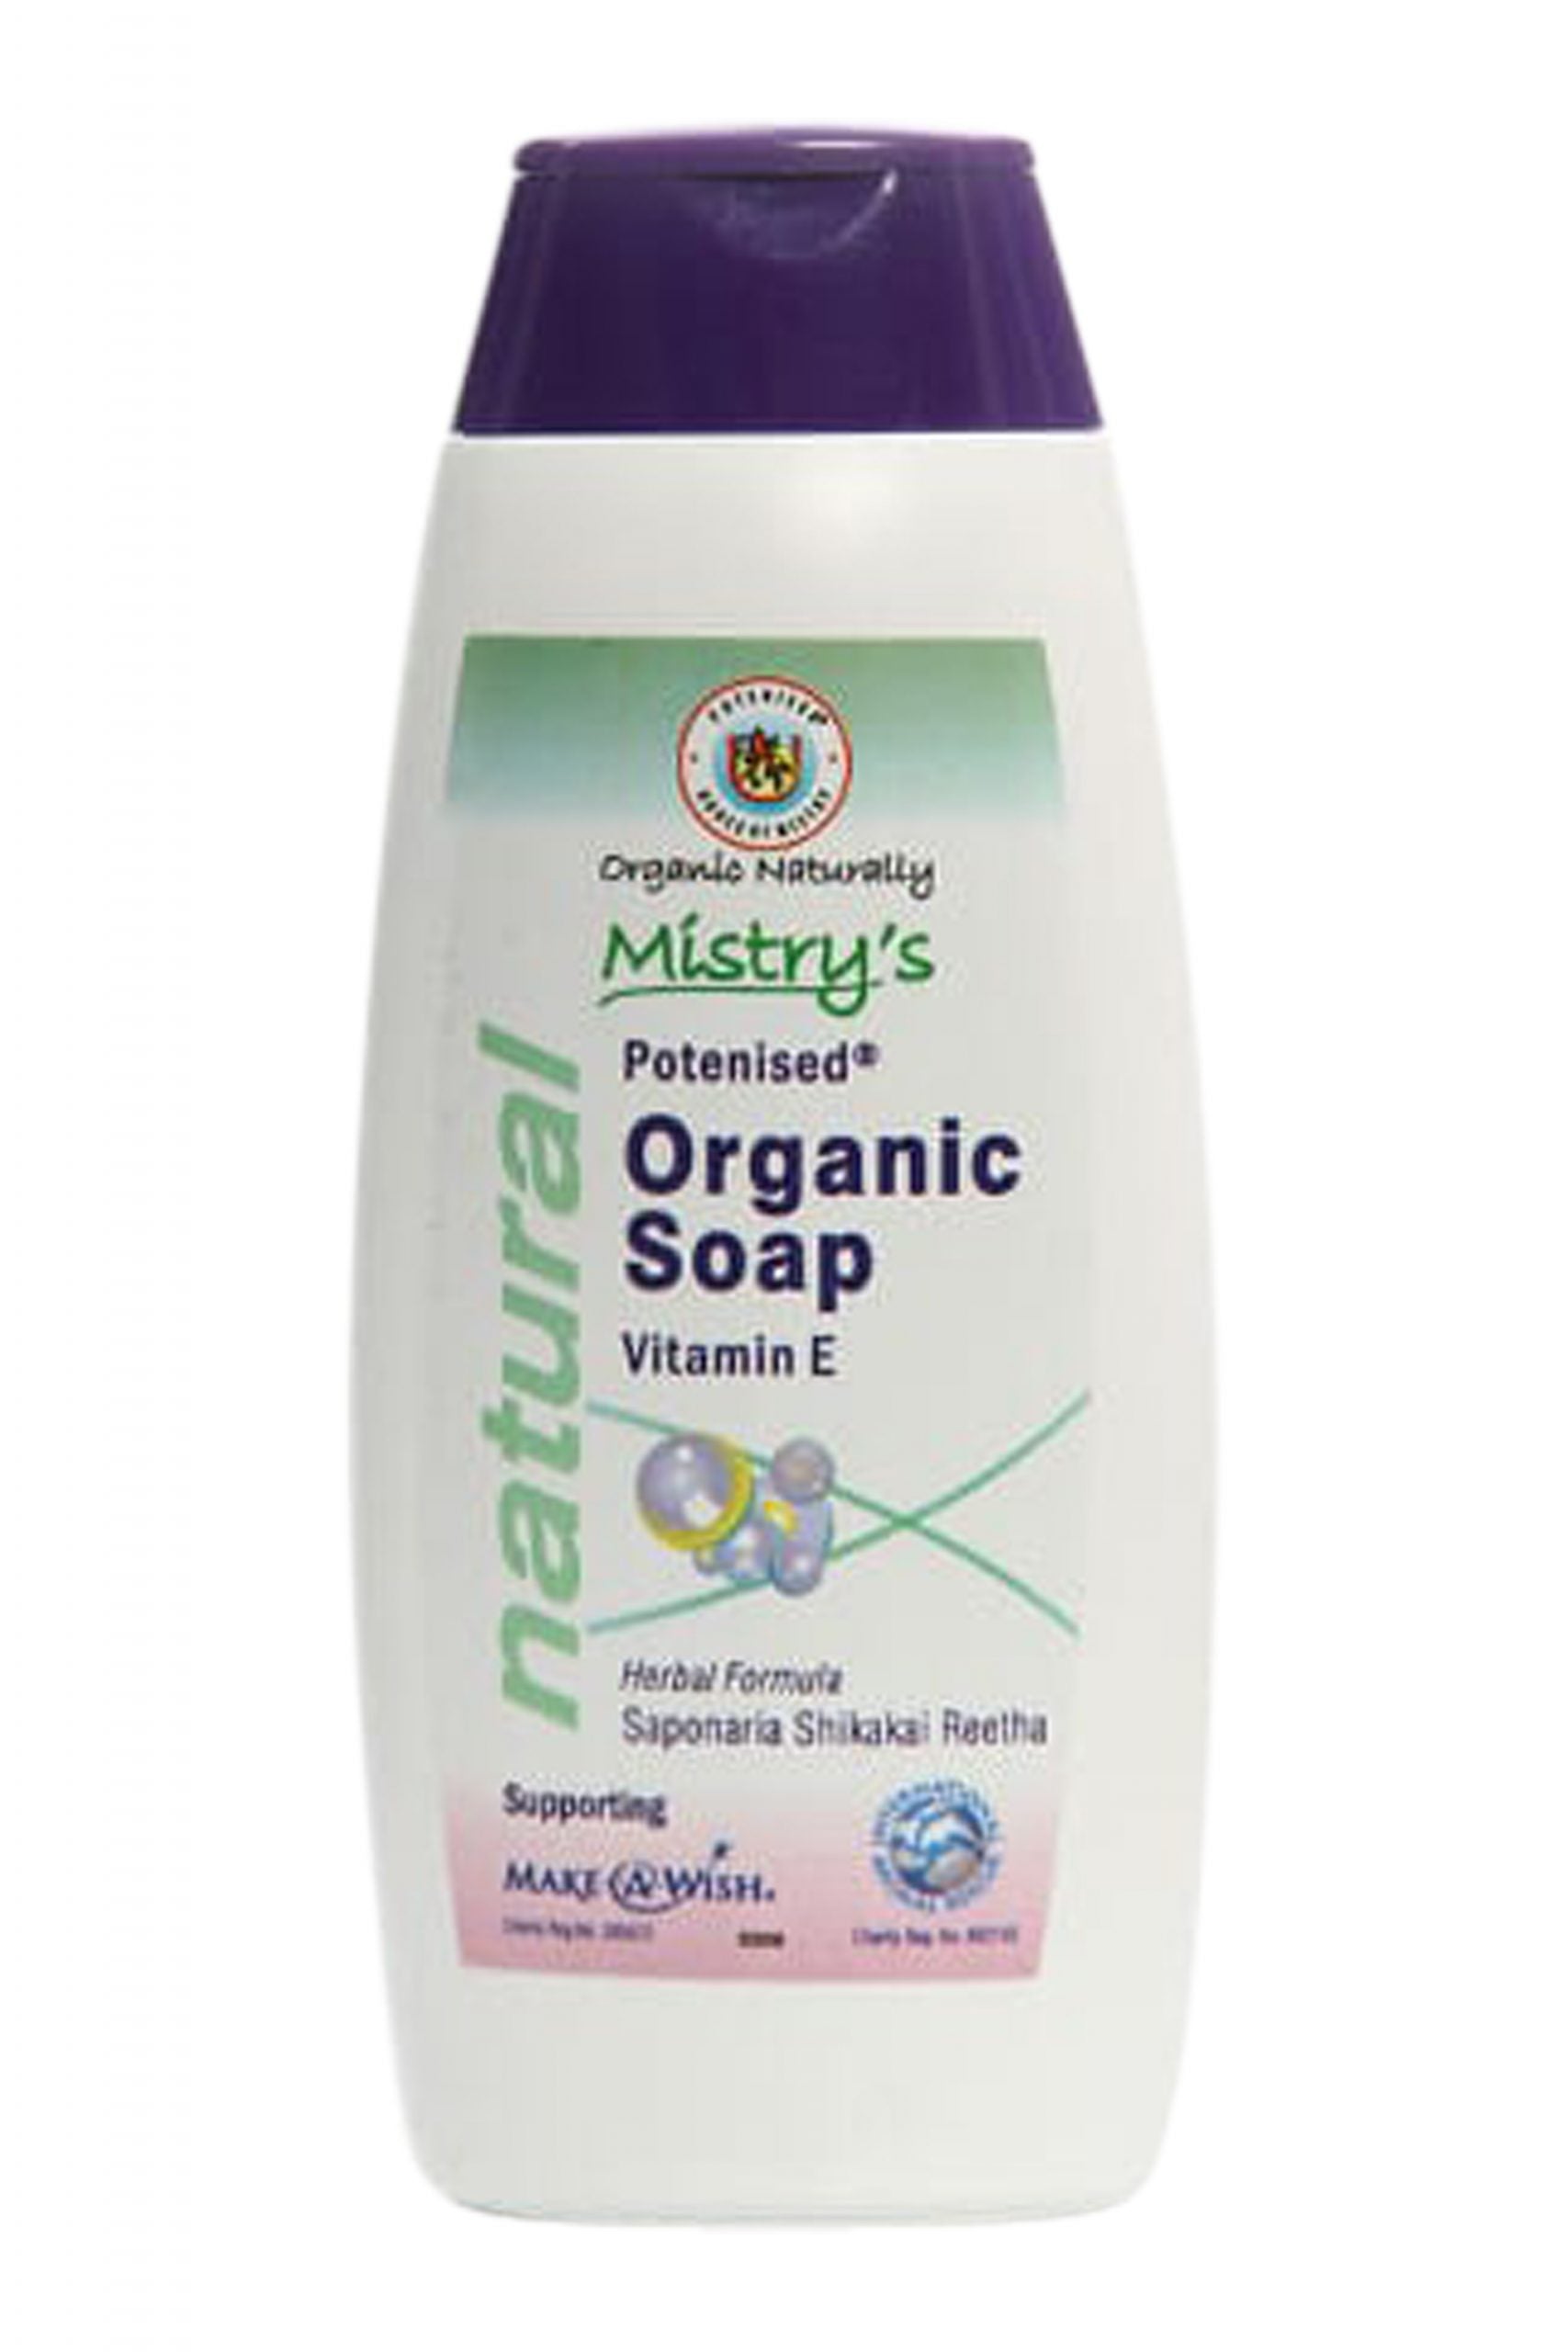 Organic Soap with Vitamin E davisfinest.com